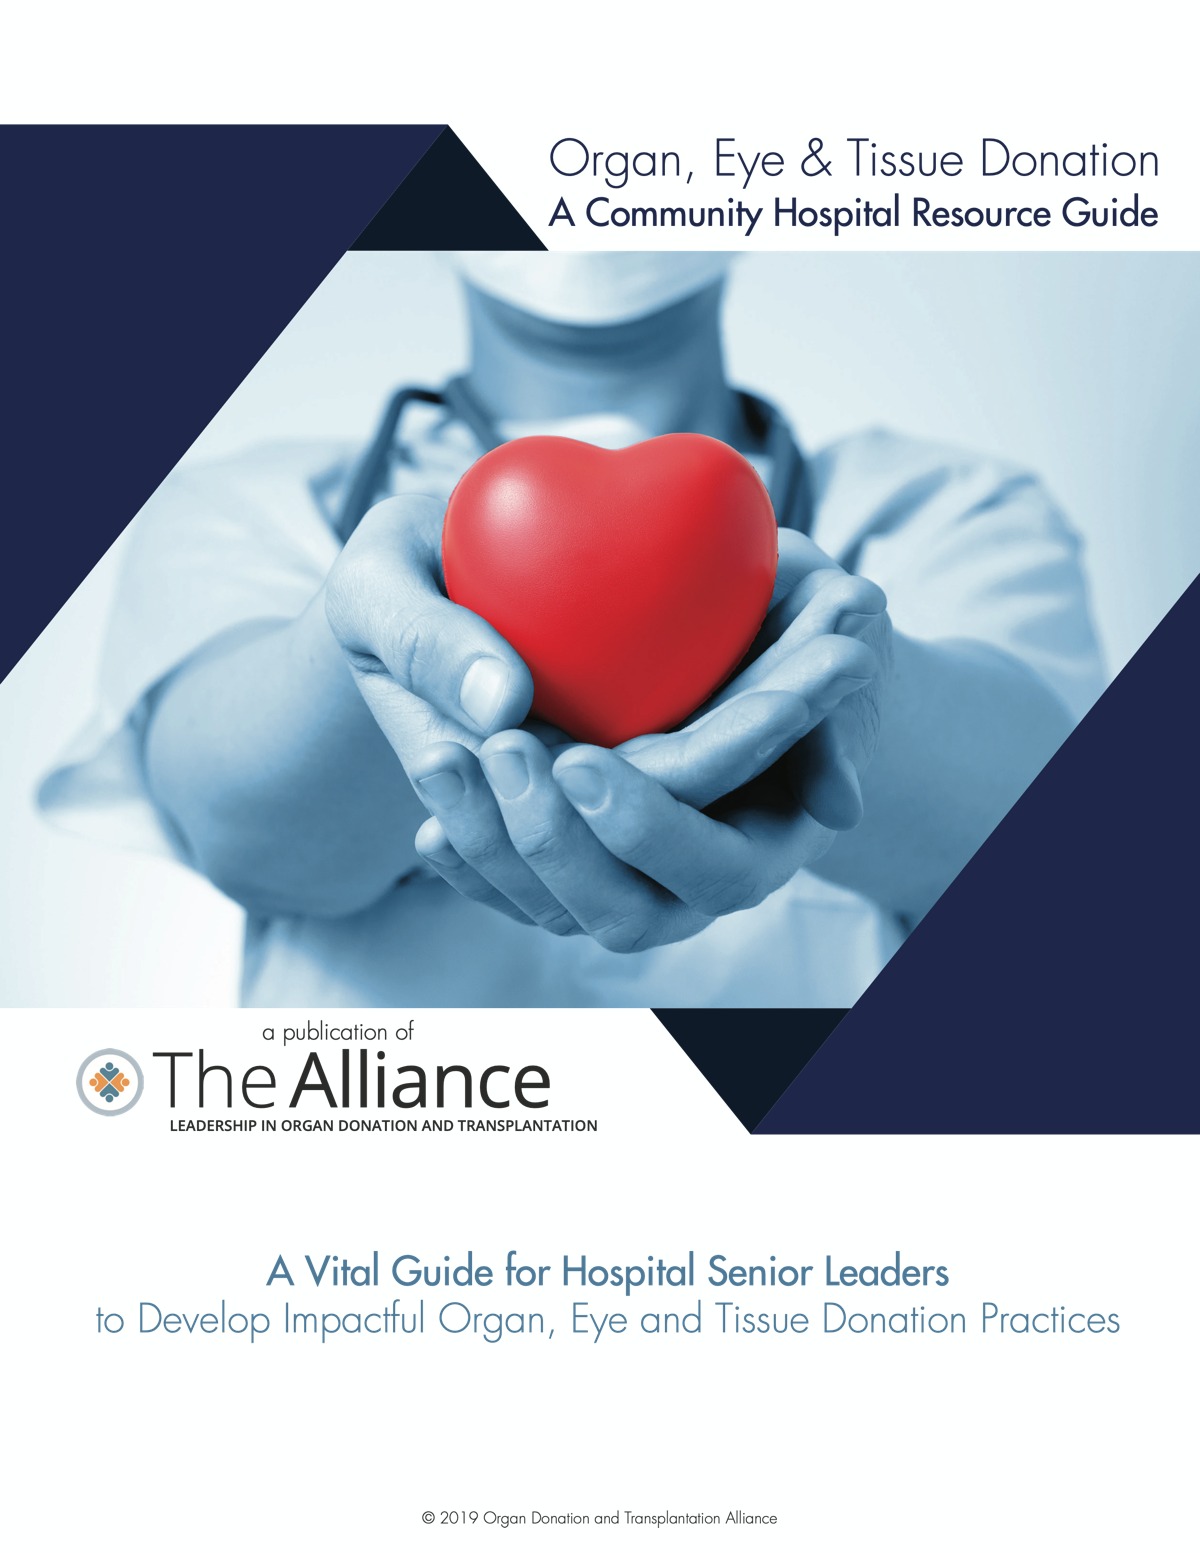 Community Hospital Resource Guide